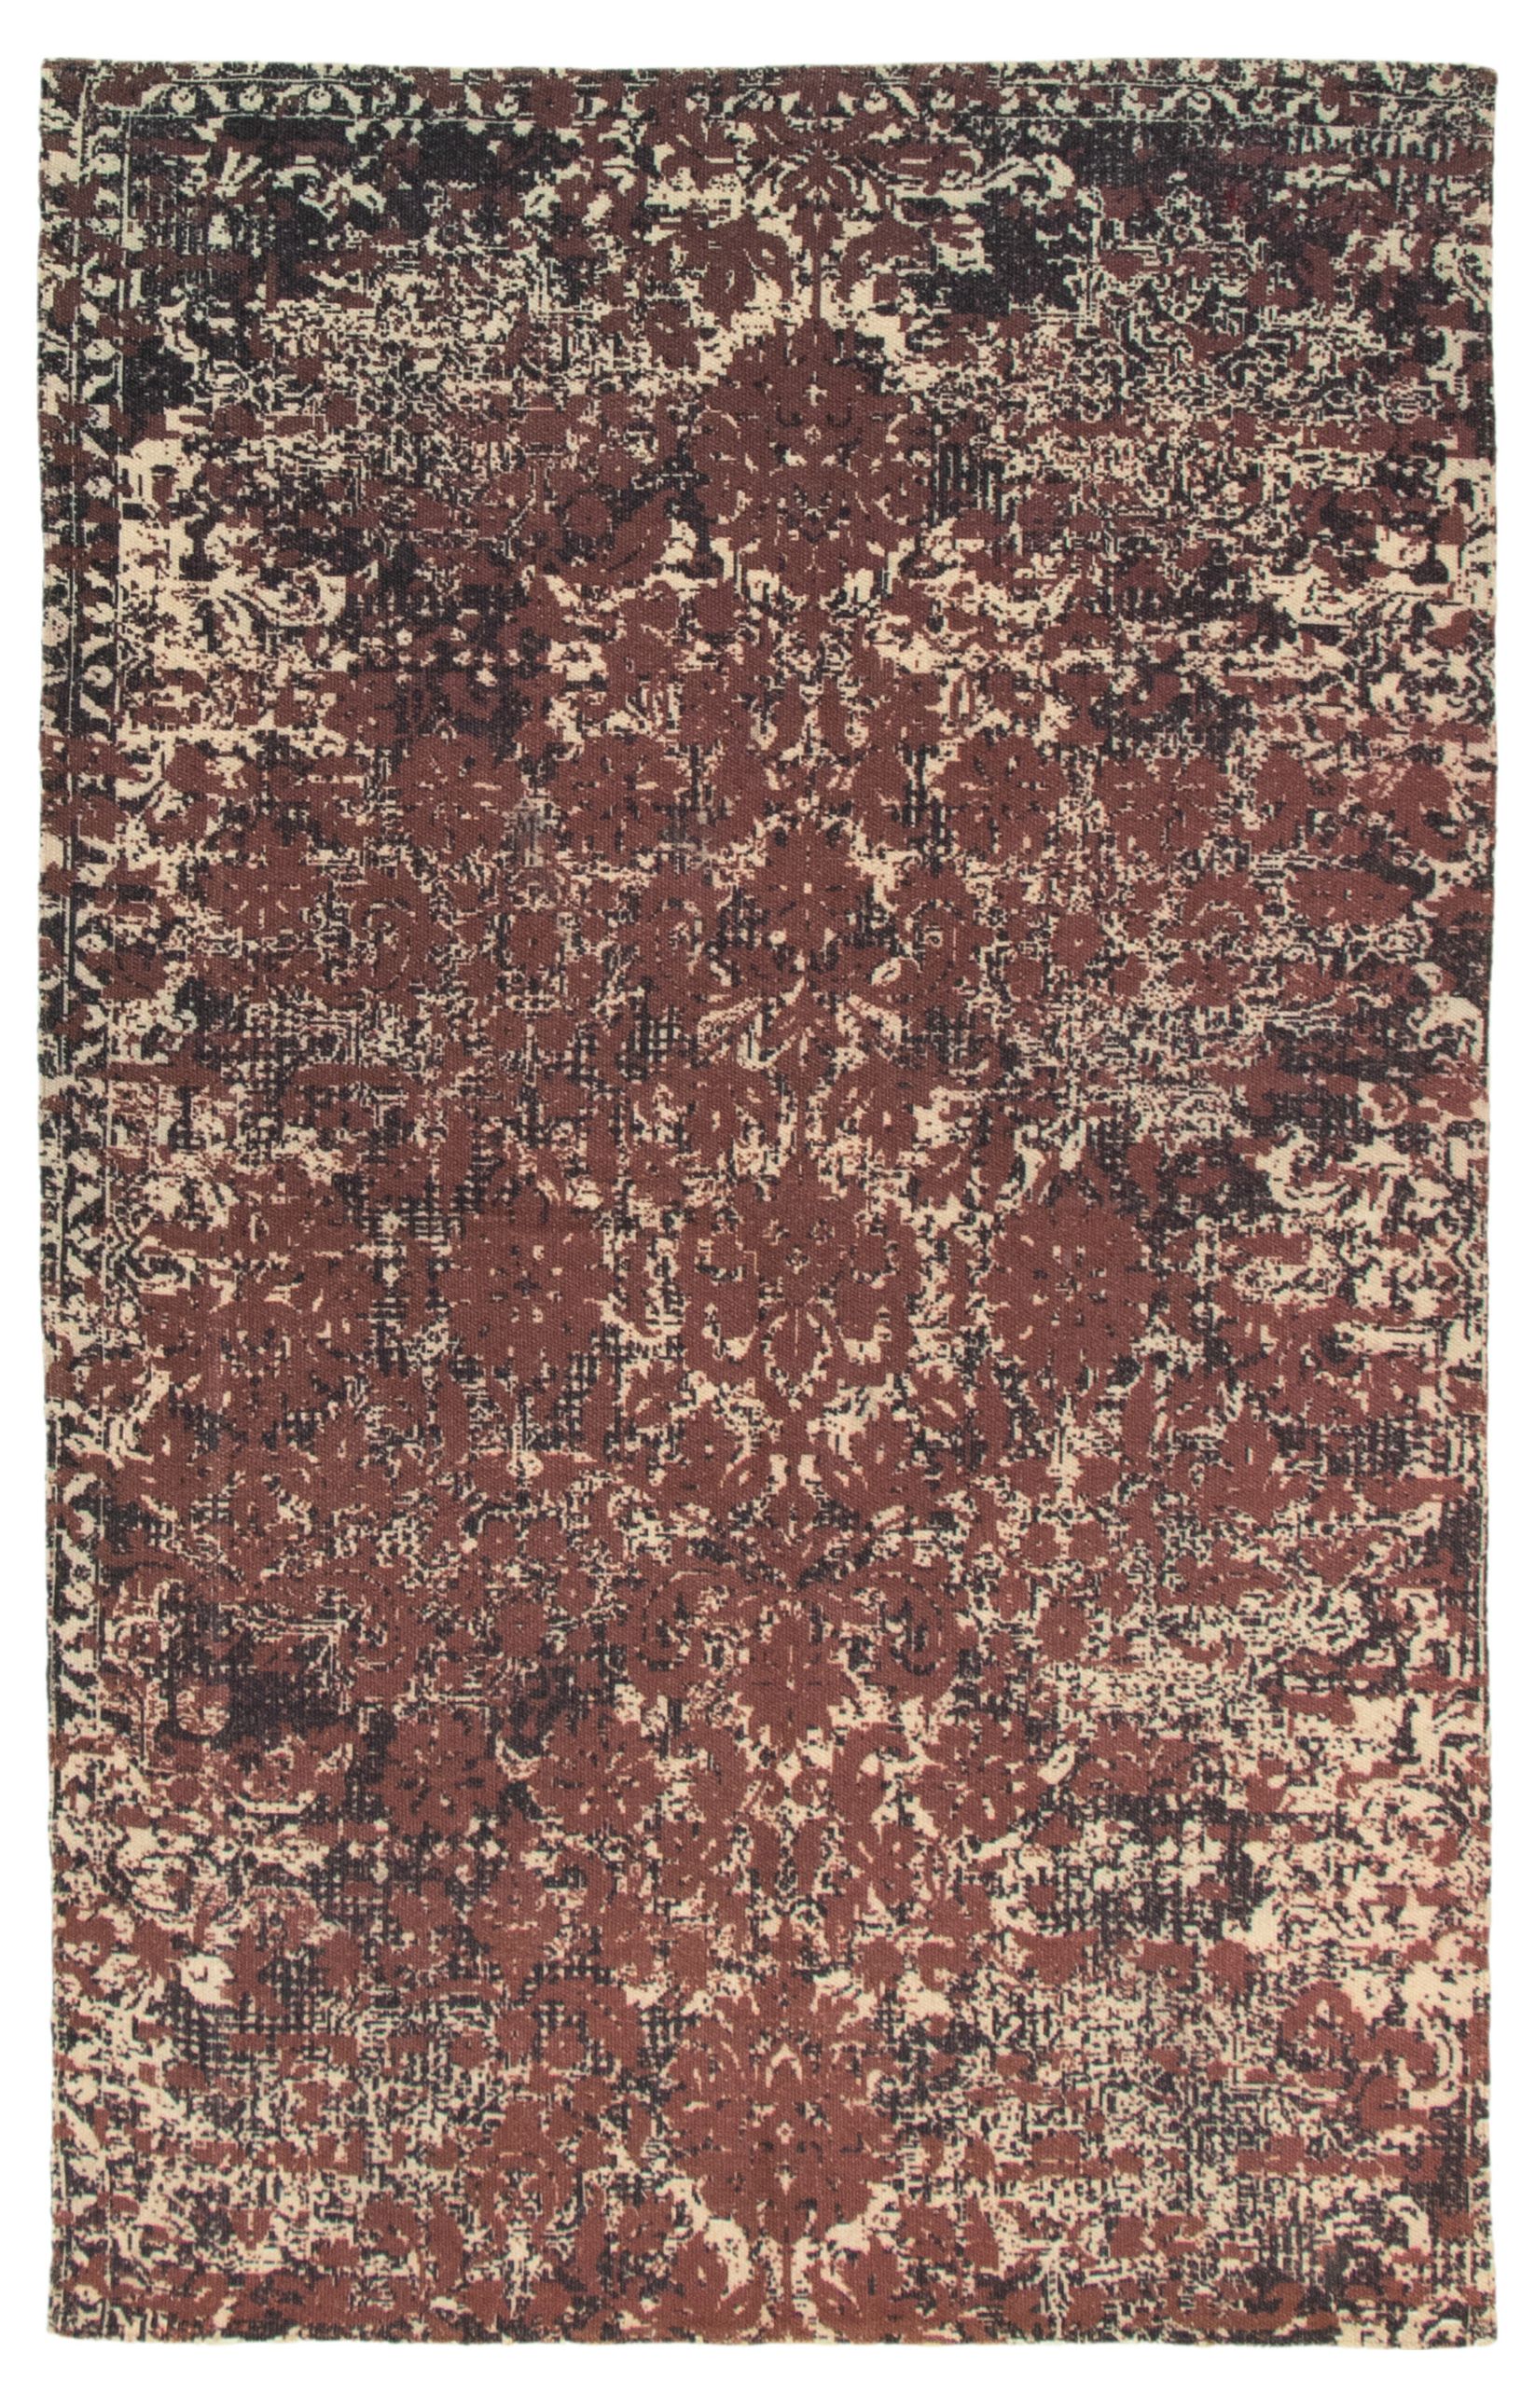 Hand woven Color Transition Burgundy Cotton Kilim 4'11" x 7'9" Size: 4'11" x 7'9"  